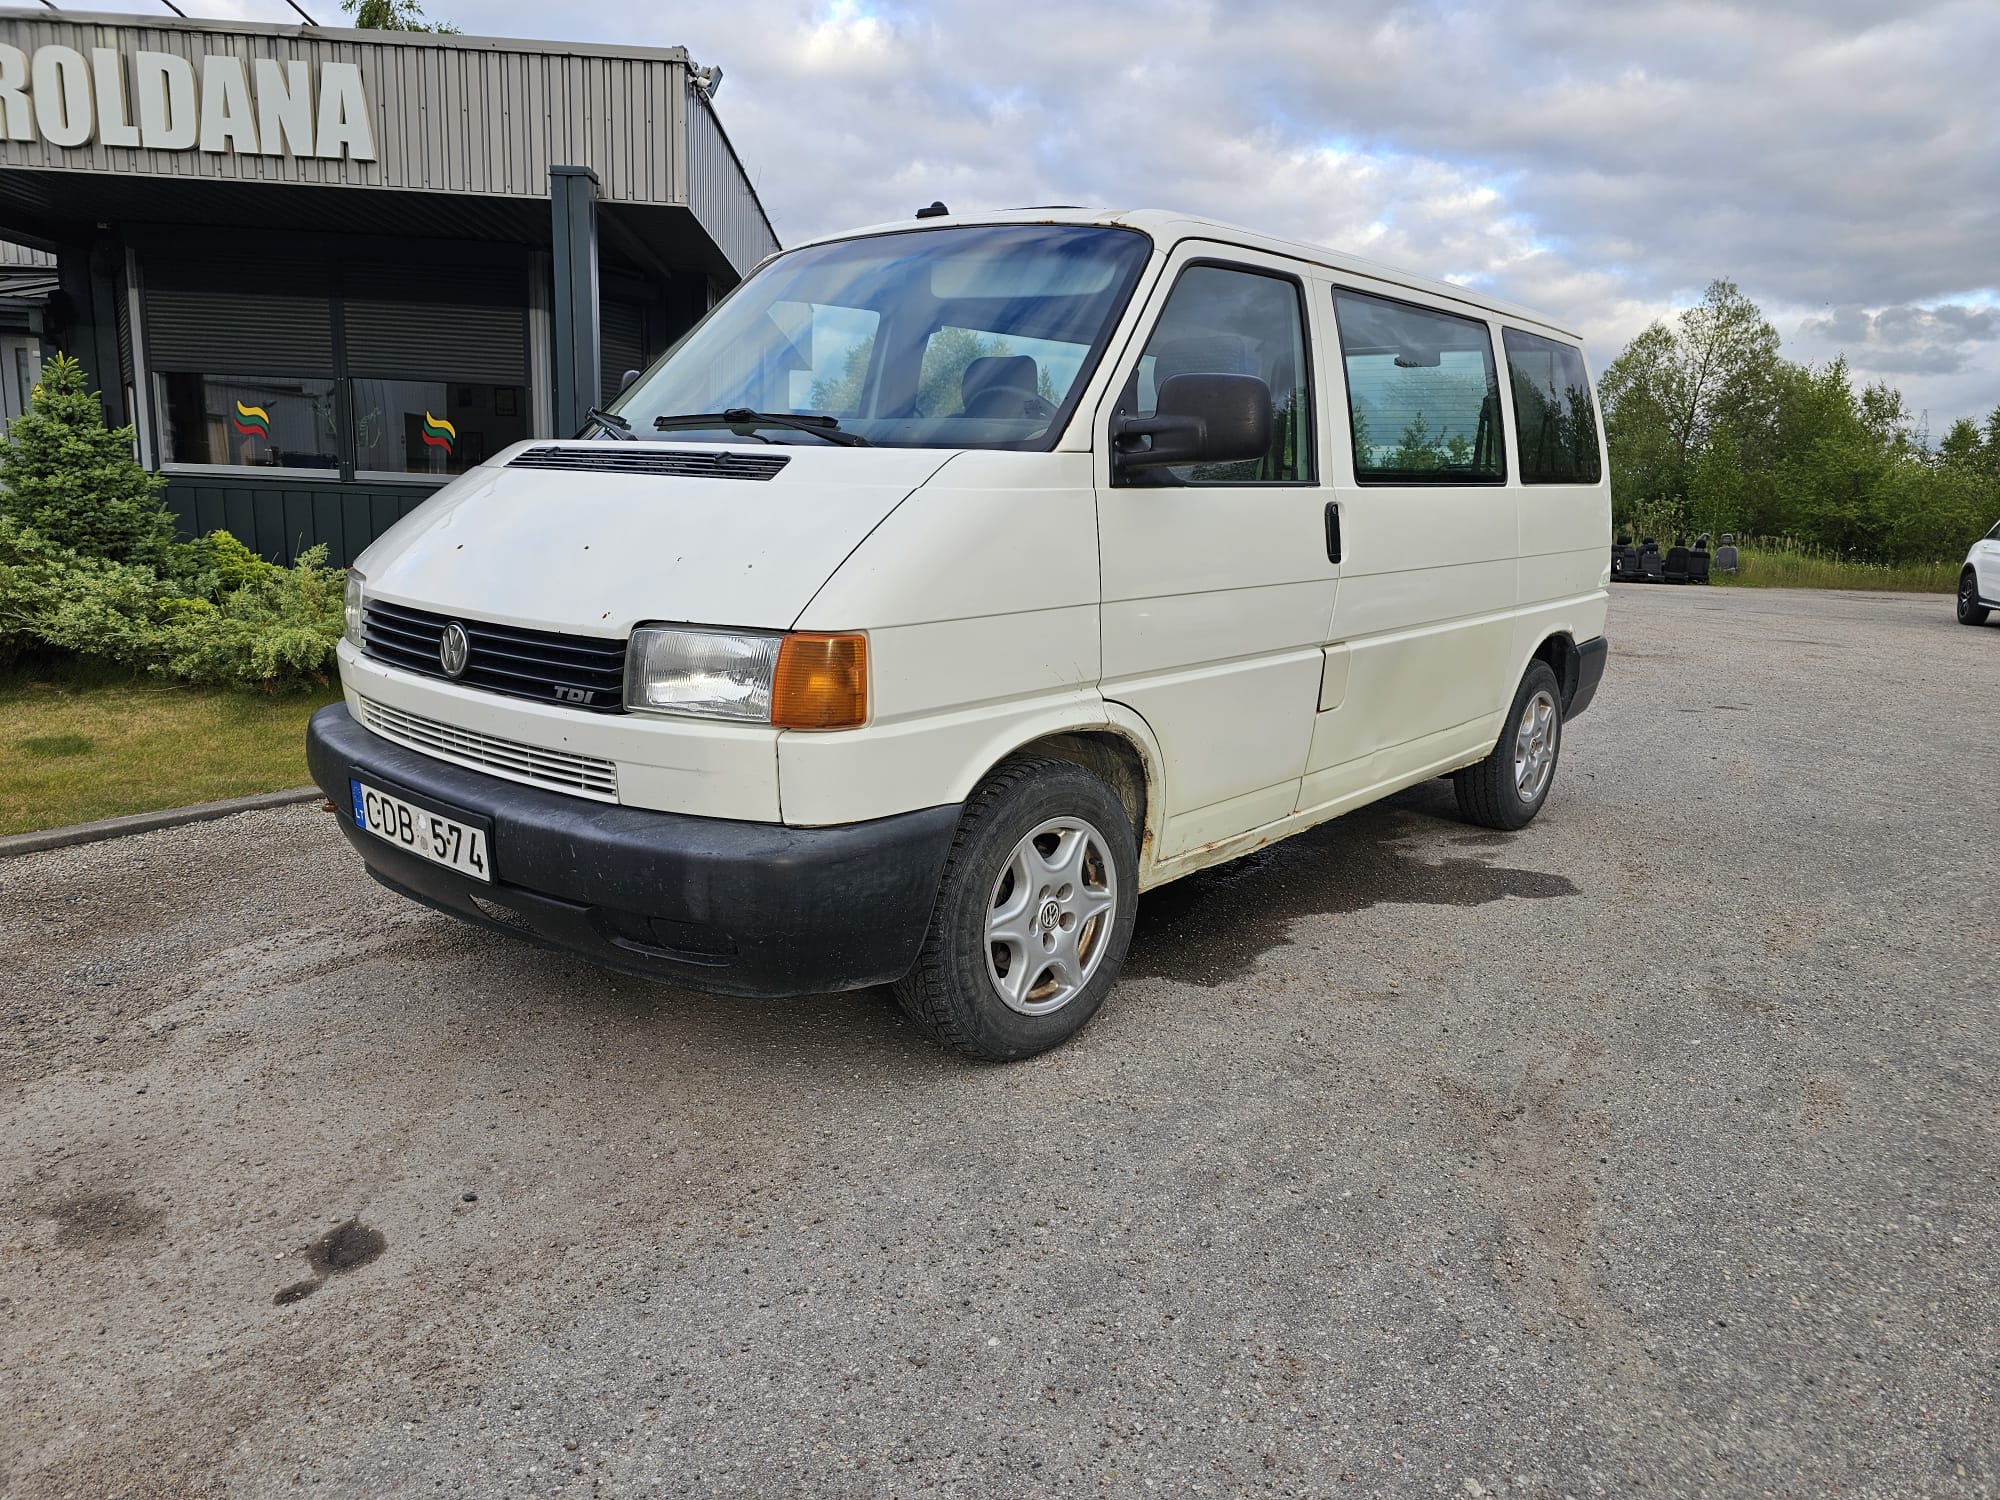 Volkswagen Transporter, 2.5 l., keleivinis mikroautobusas, 2000/naudoti automobiliai/Roldana